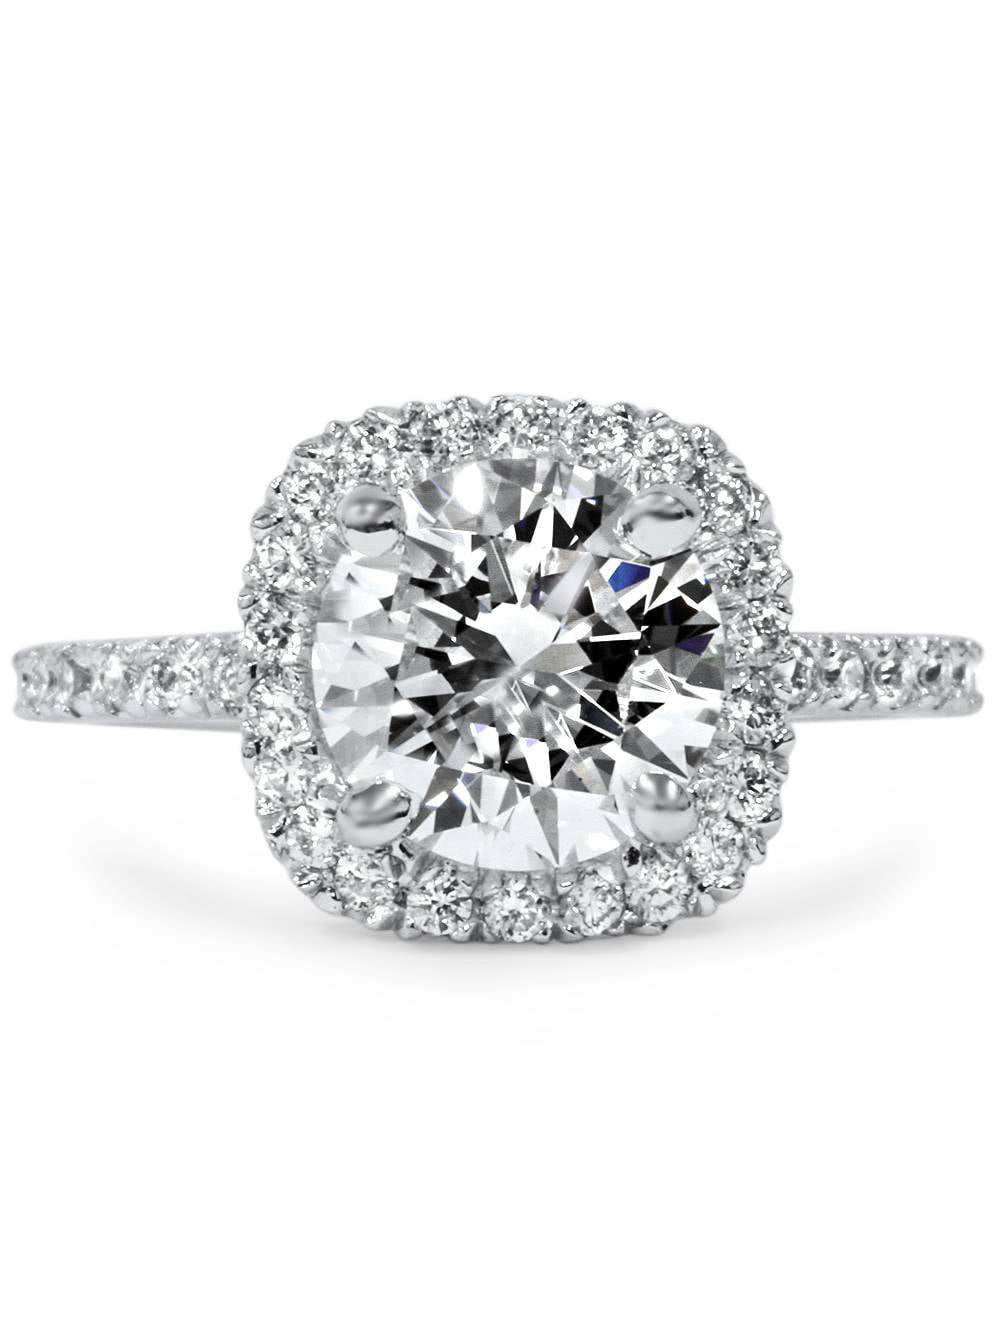 1 3 carat diamond solitaire ring in 14k white gold Pompeii3 1 3 4 Ct Halo Diamond Engagement Ring Round Cut 14k White Gold Walmart Com Walmart Com